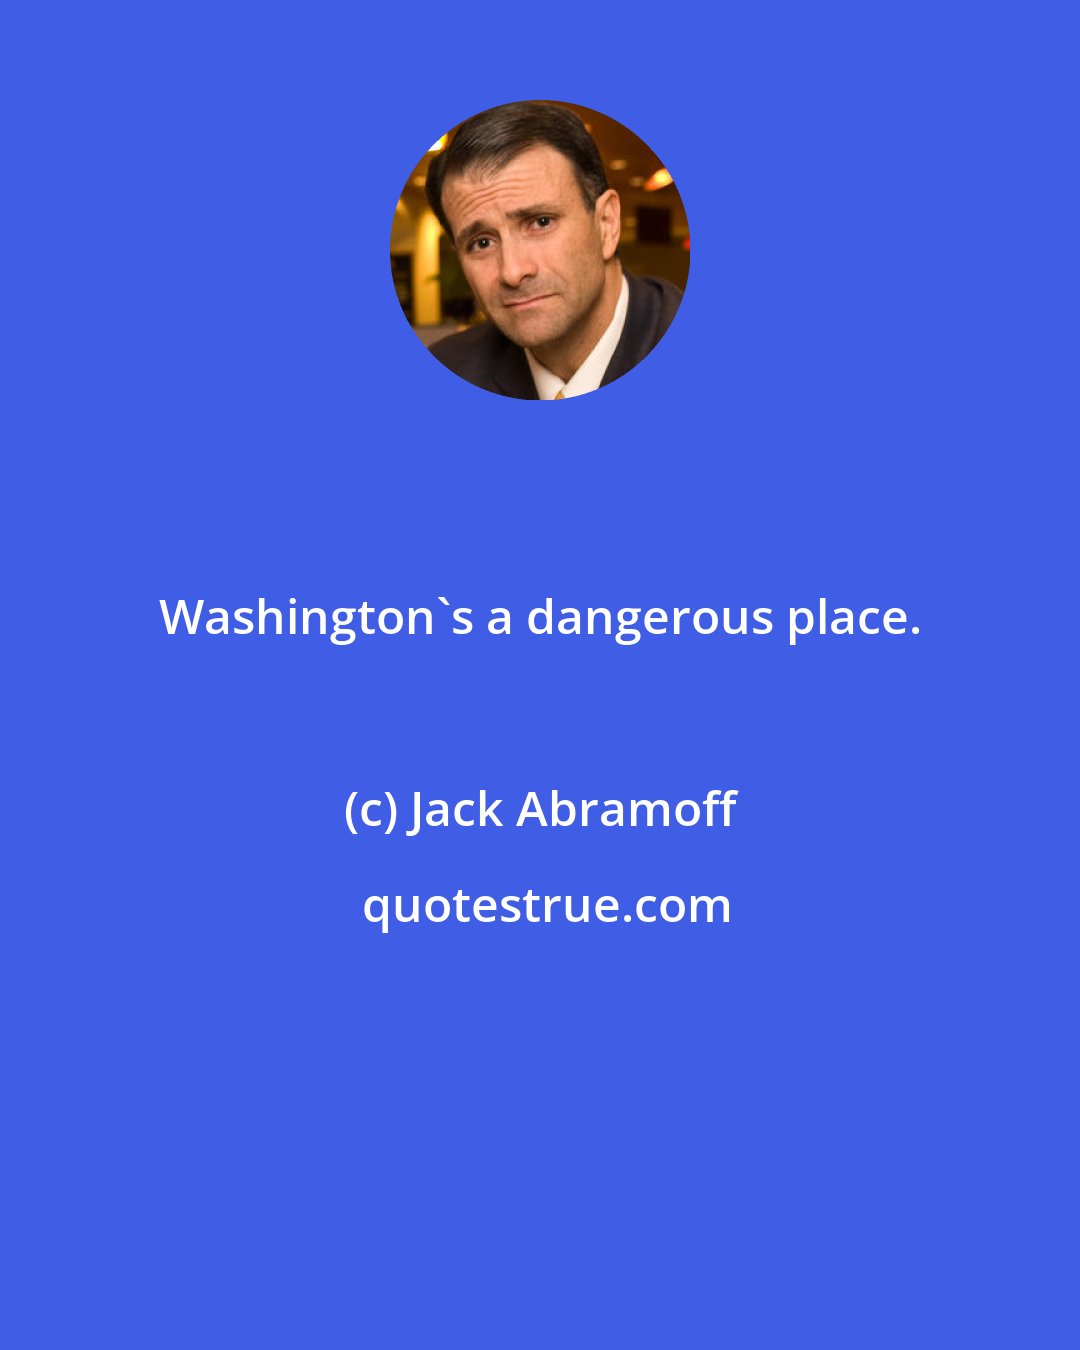 Jack Abramoff: Washington's a dangerous place.